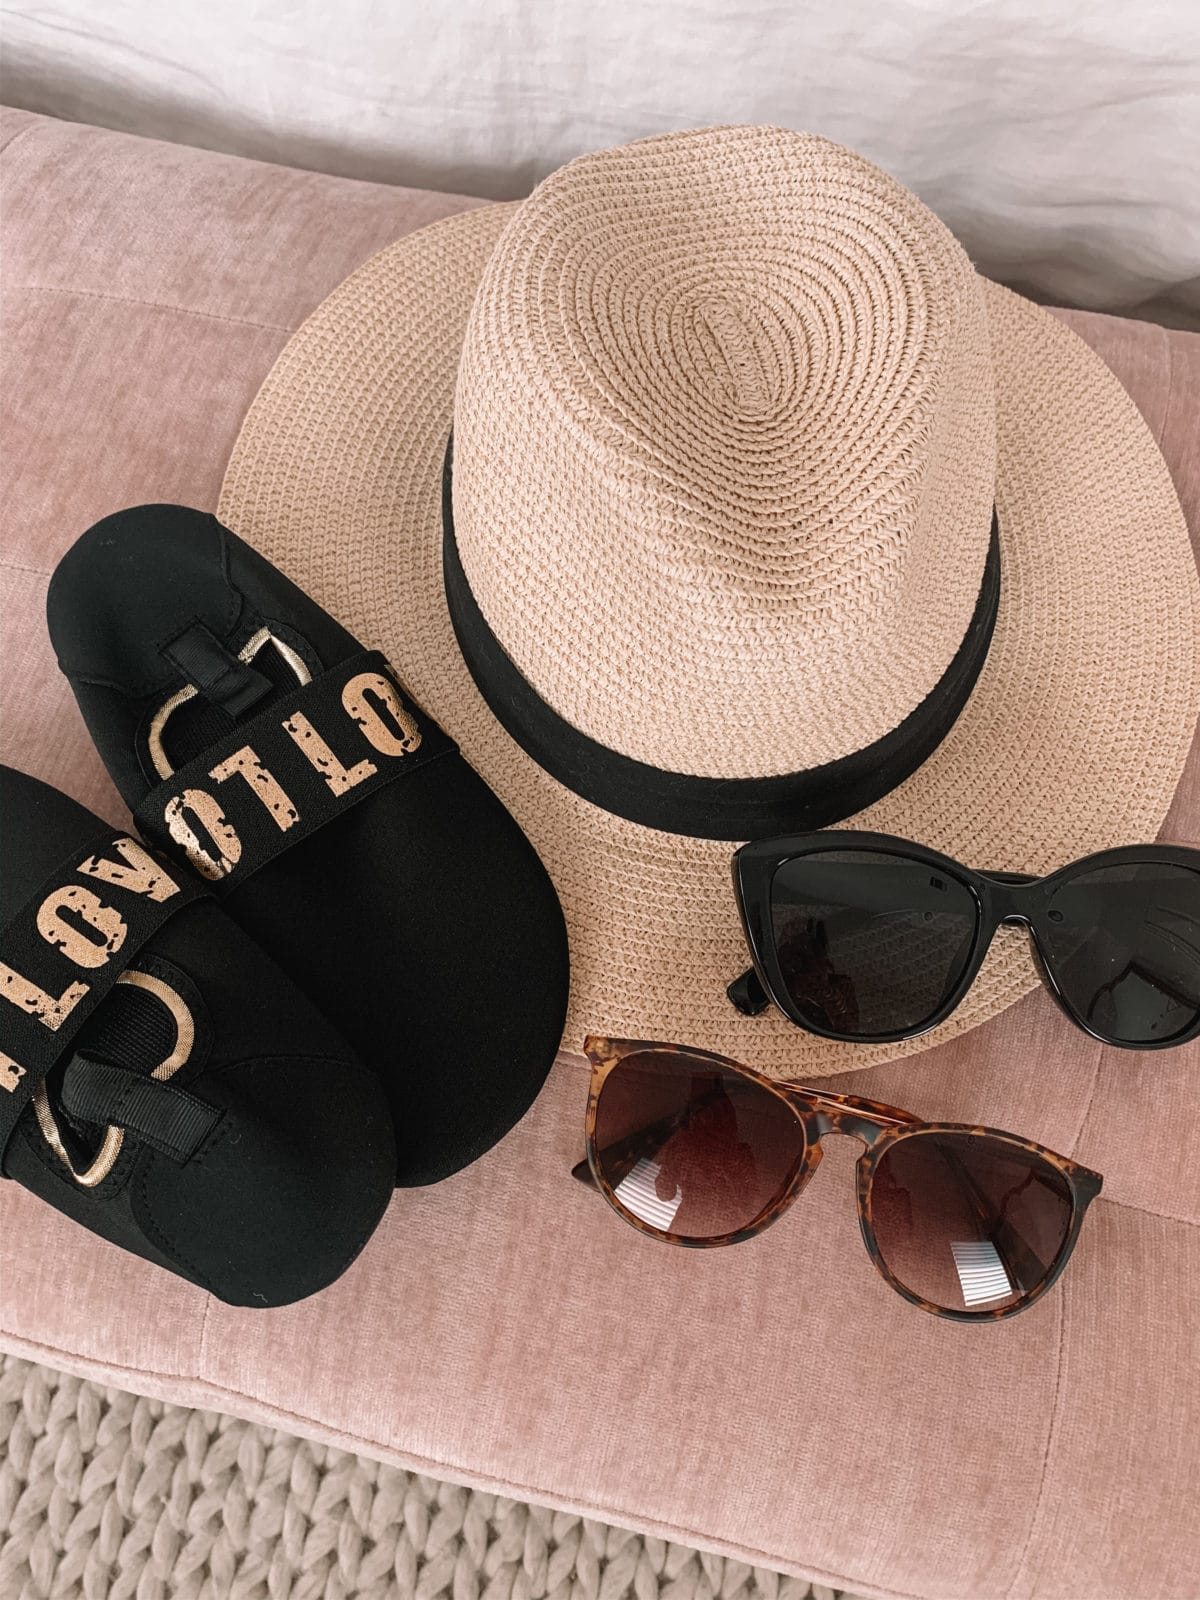 Beach Hat, Love Water Shoes, Tortoise Shell Glasses, Jackie-O Sunglasses